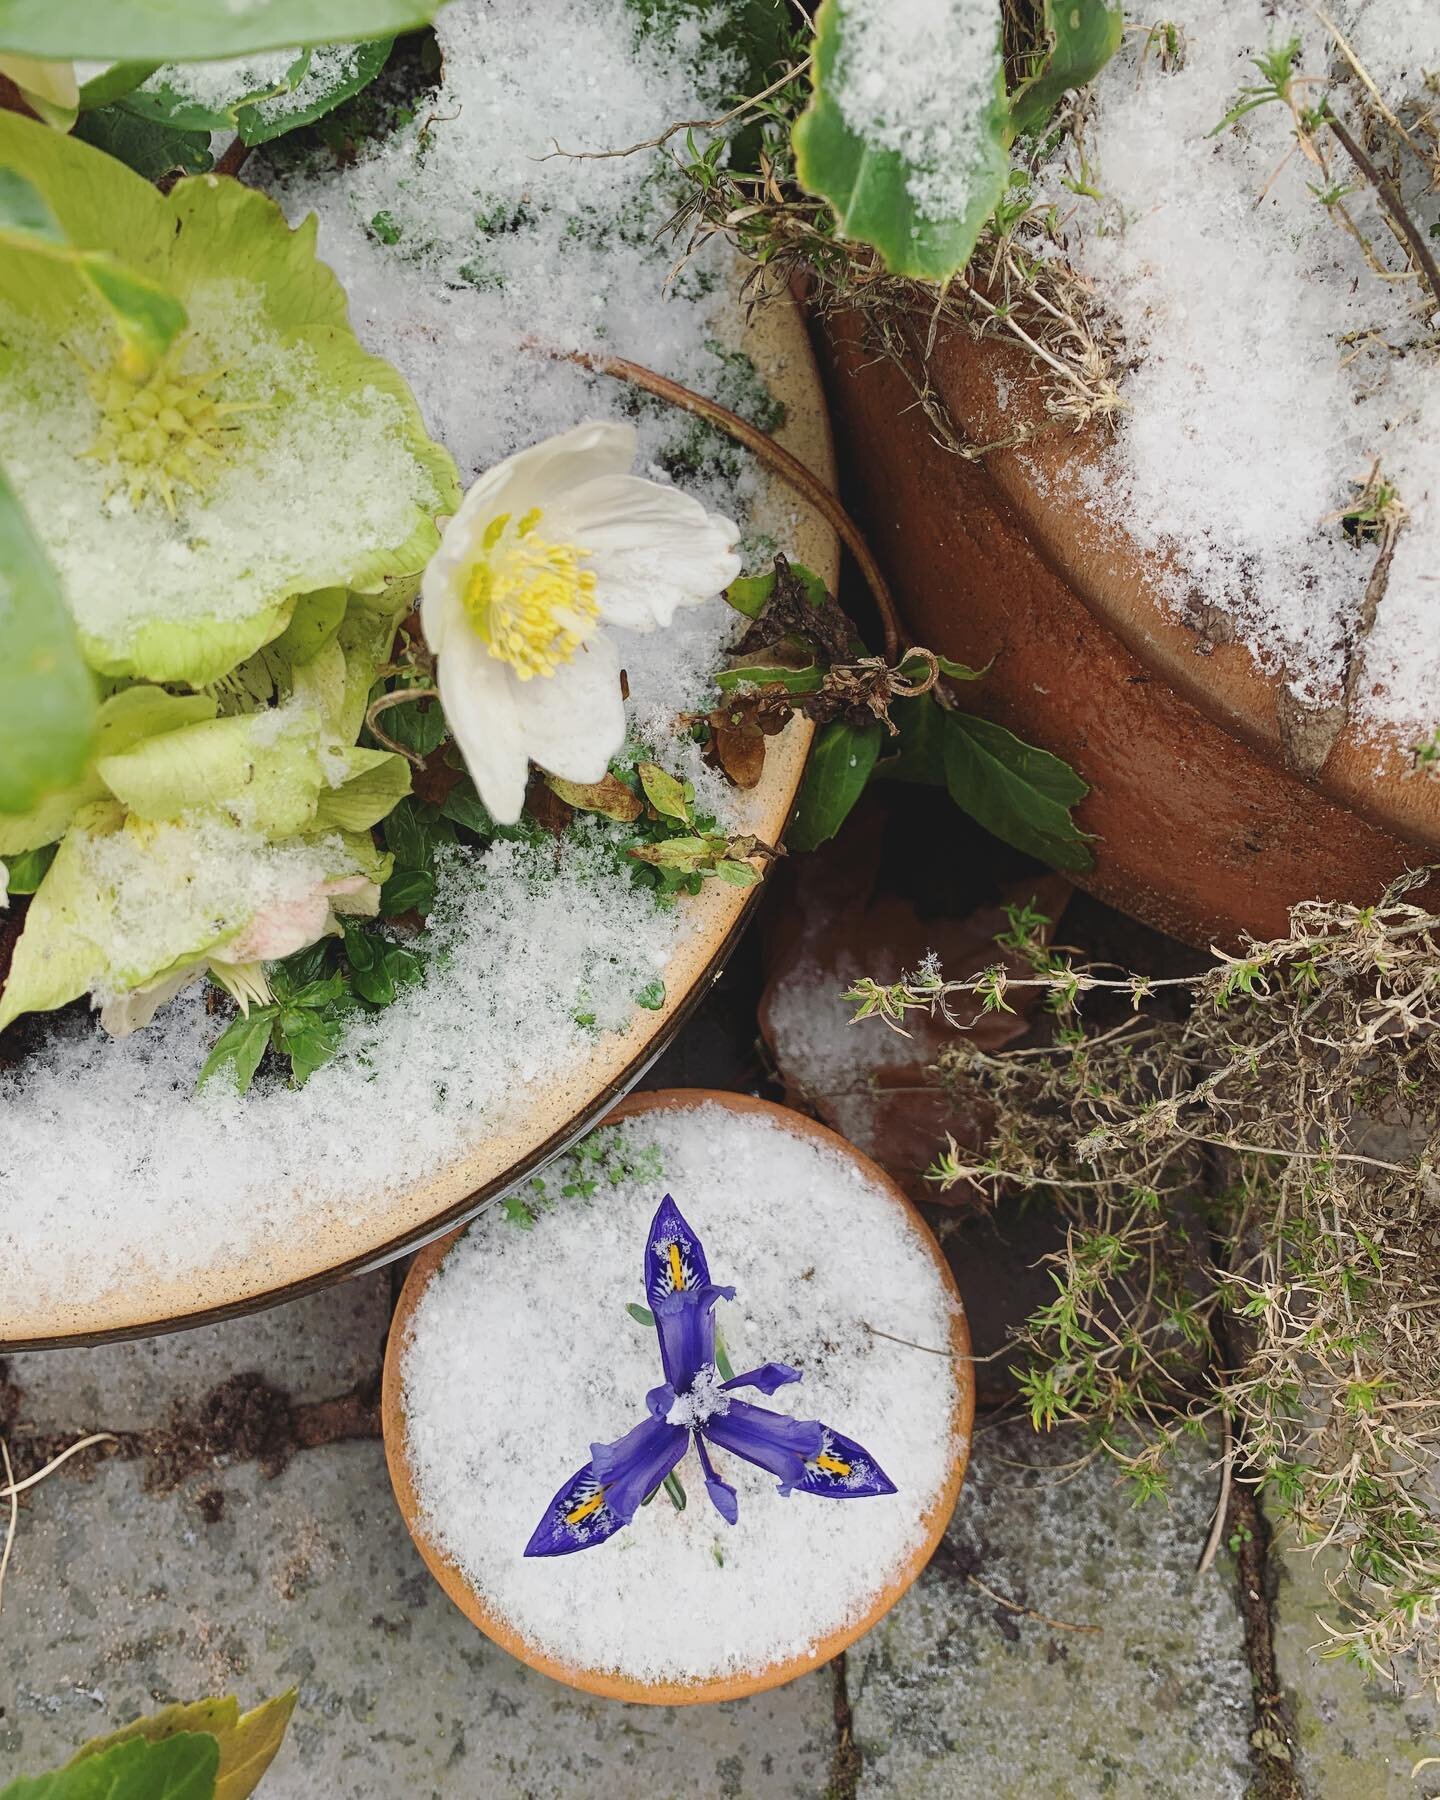 Little iris in the snow 

#flowers #snow #flowersinsnow #iris #hellebore ##vivastirchley #stirchley